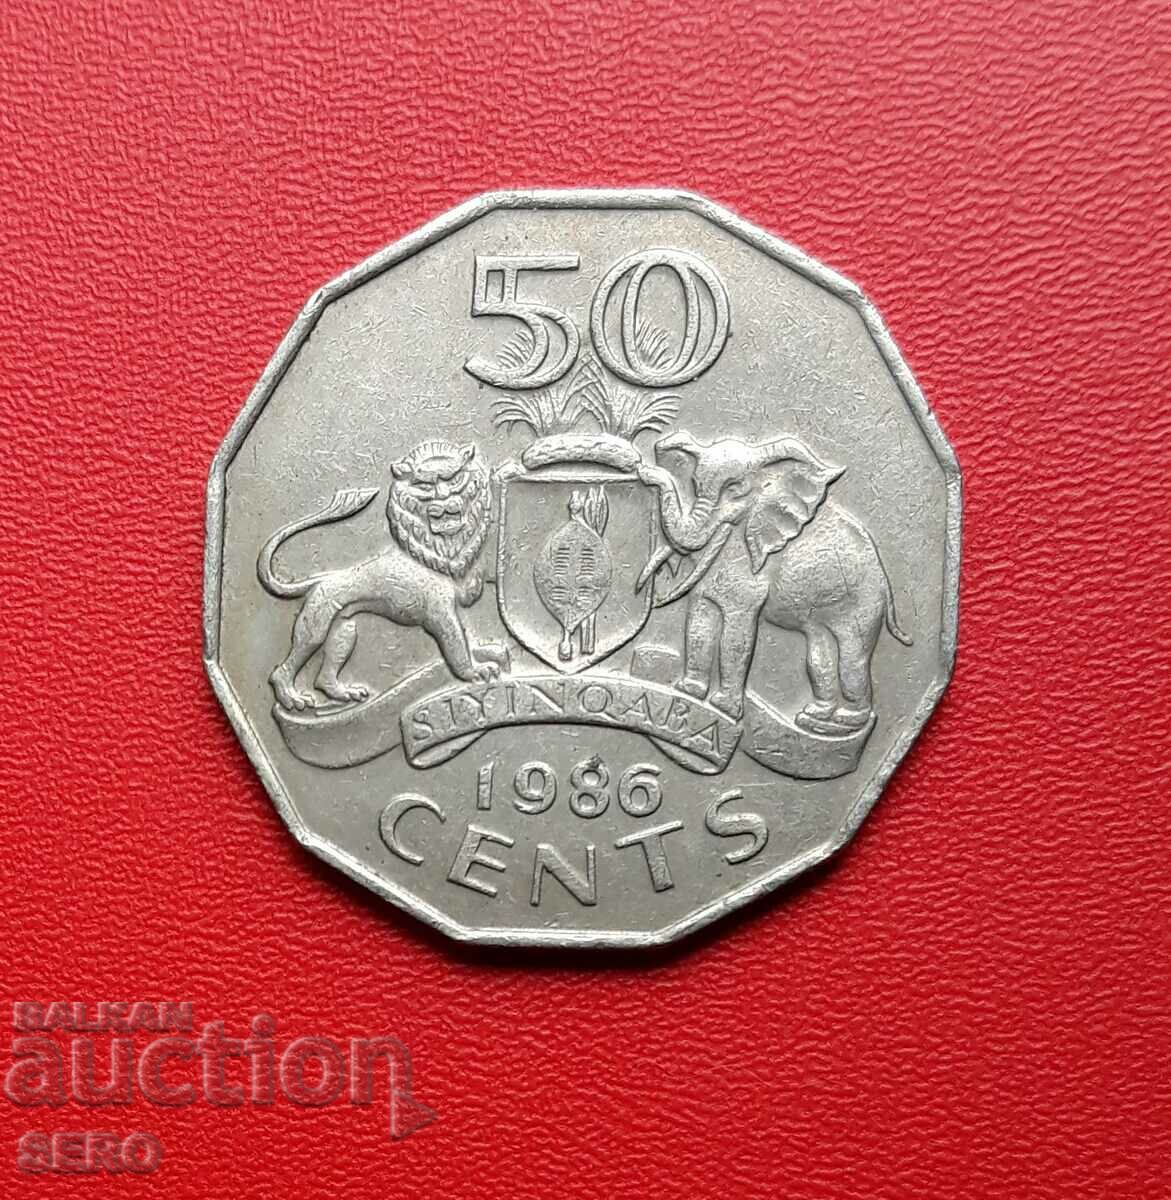 Swaziland-50 cents 1986